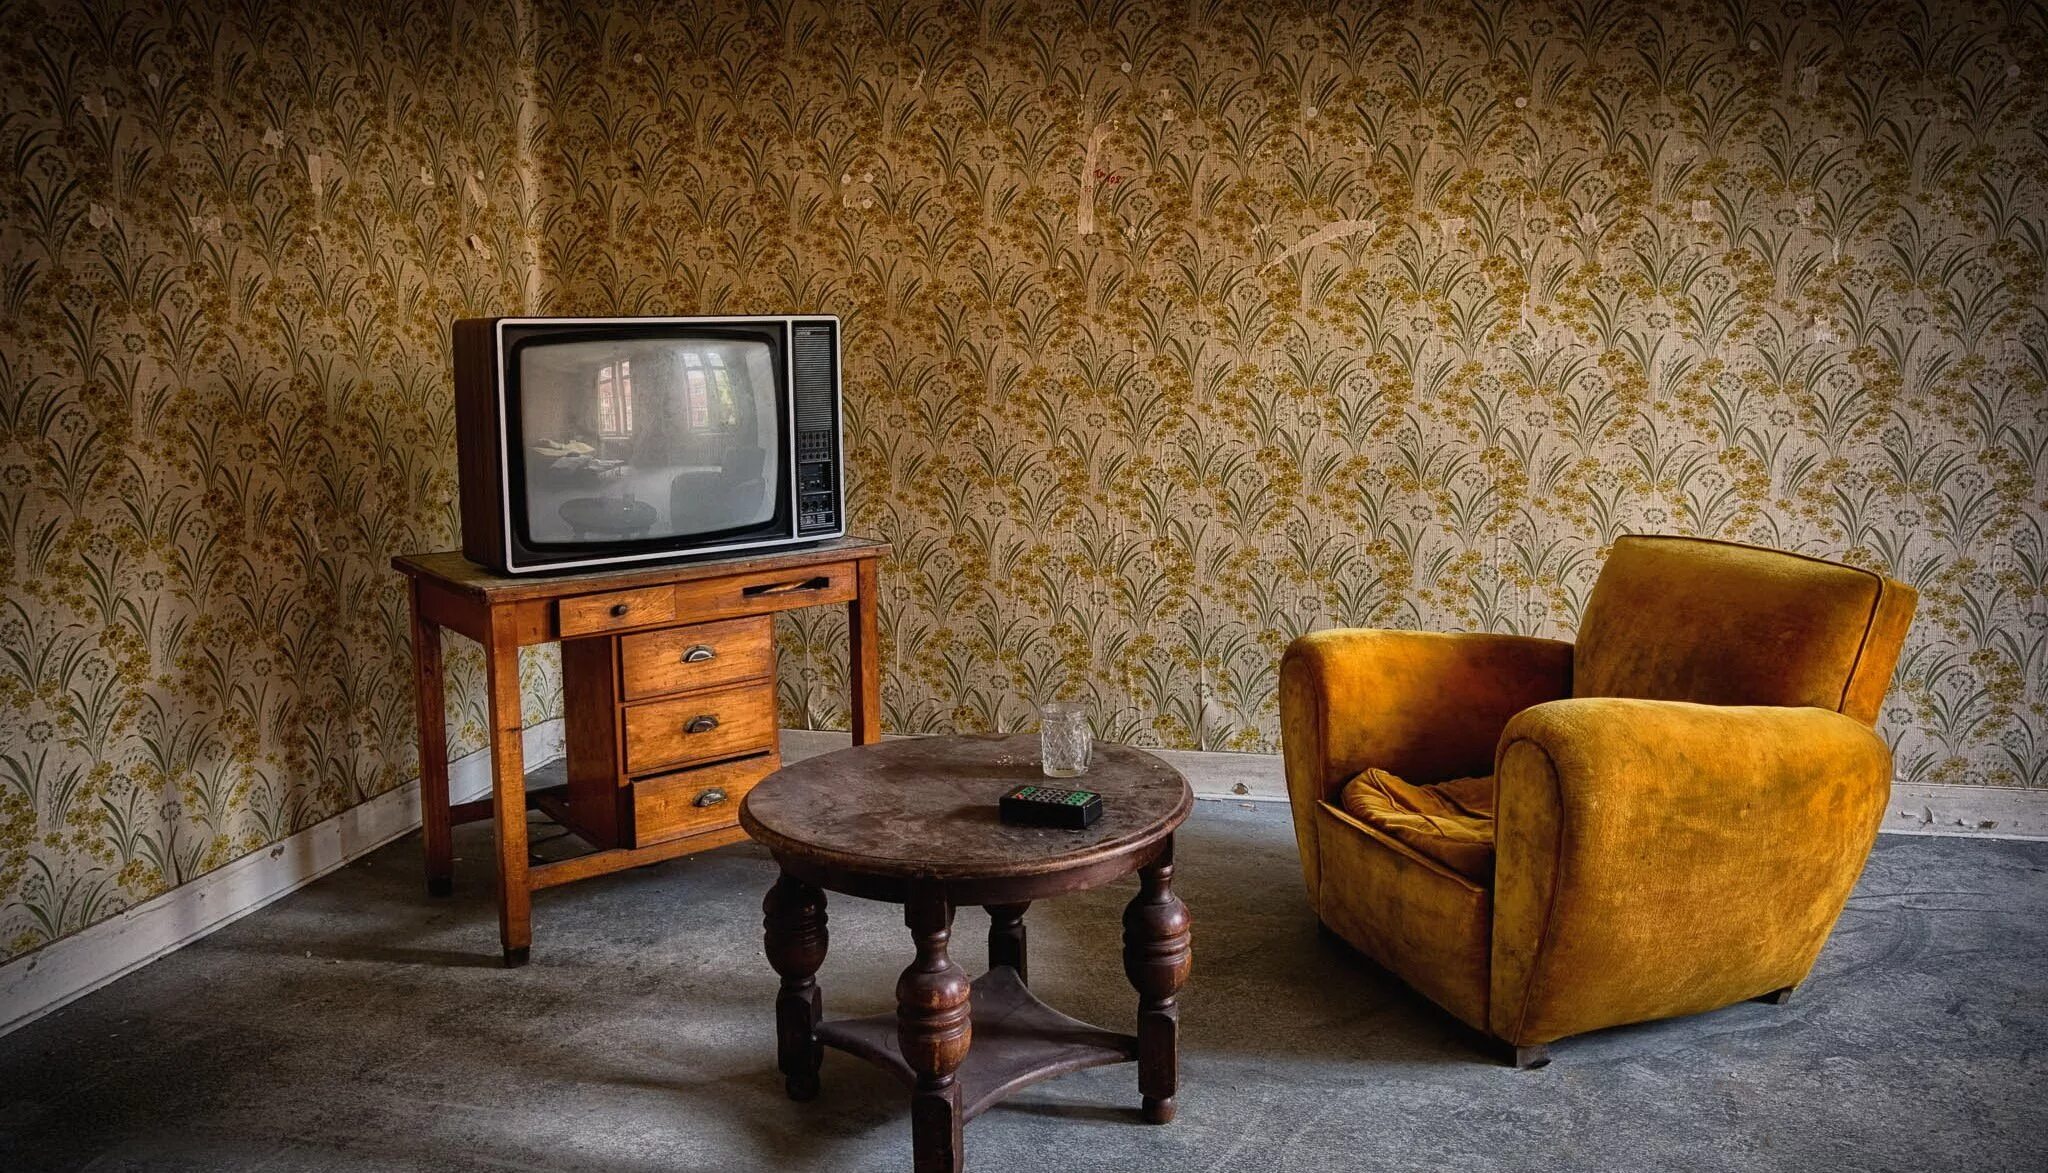 Старые обои в квартире. Старый телевизор в комнате. Старый телевизор в интерьере. Советская комната с телевизором. Интерьер старой квартиры.